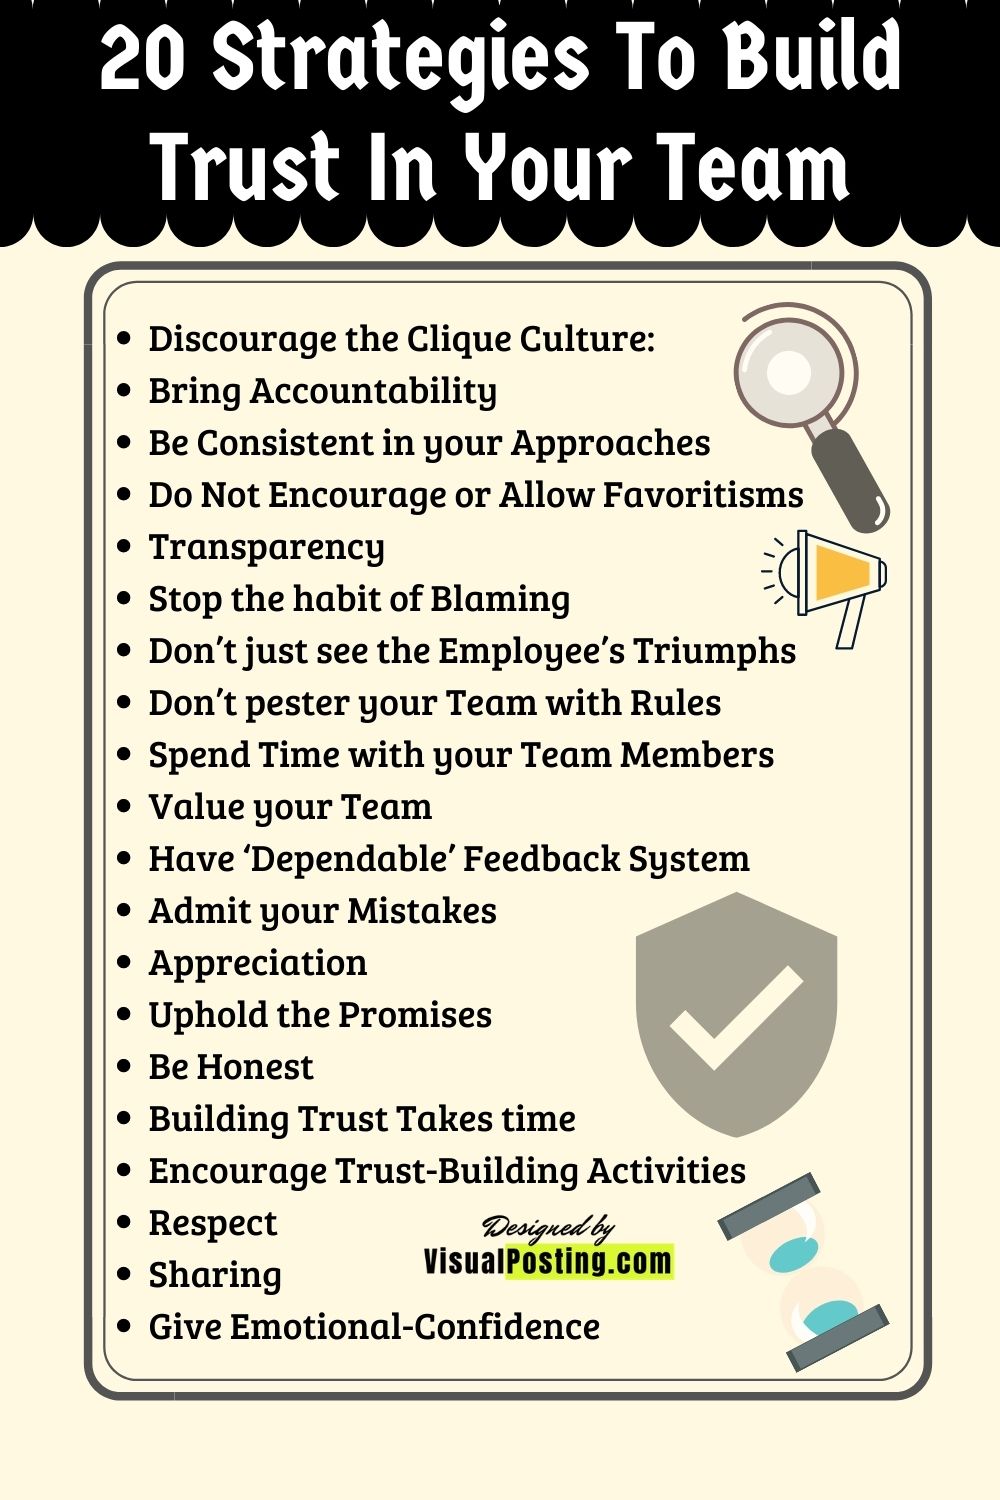 20 Strategies To Build Trust In Your Team.jpg